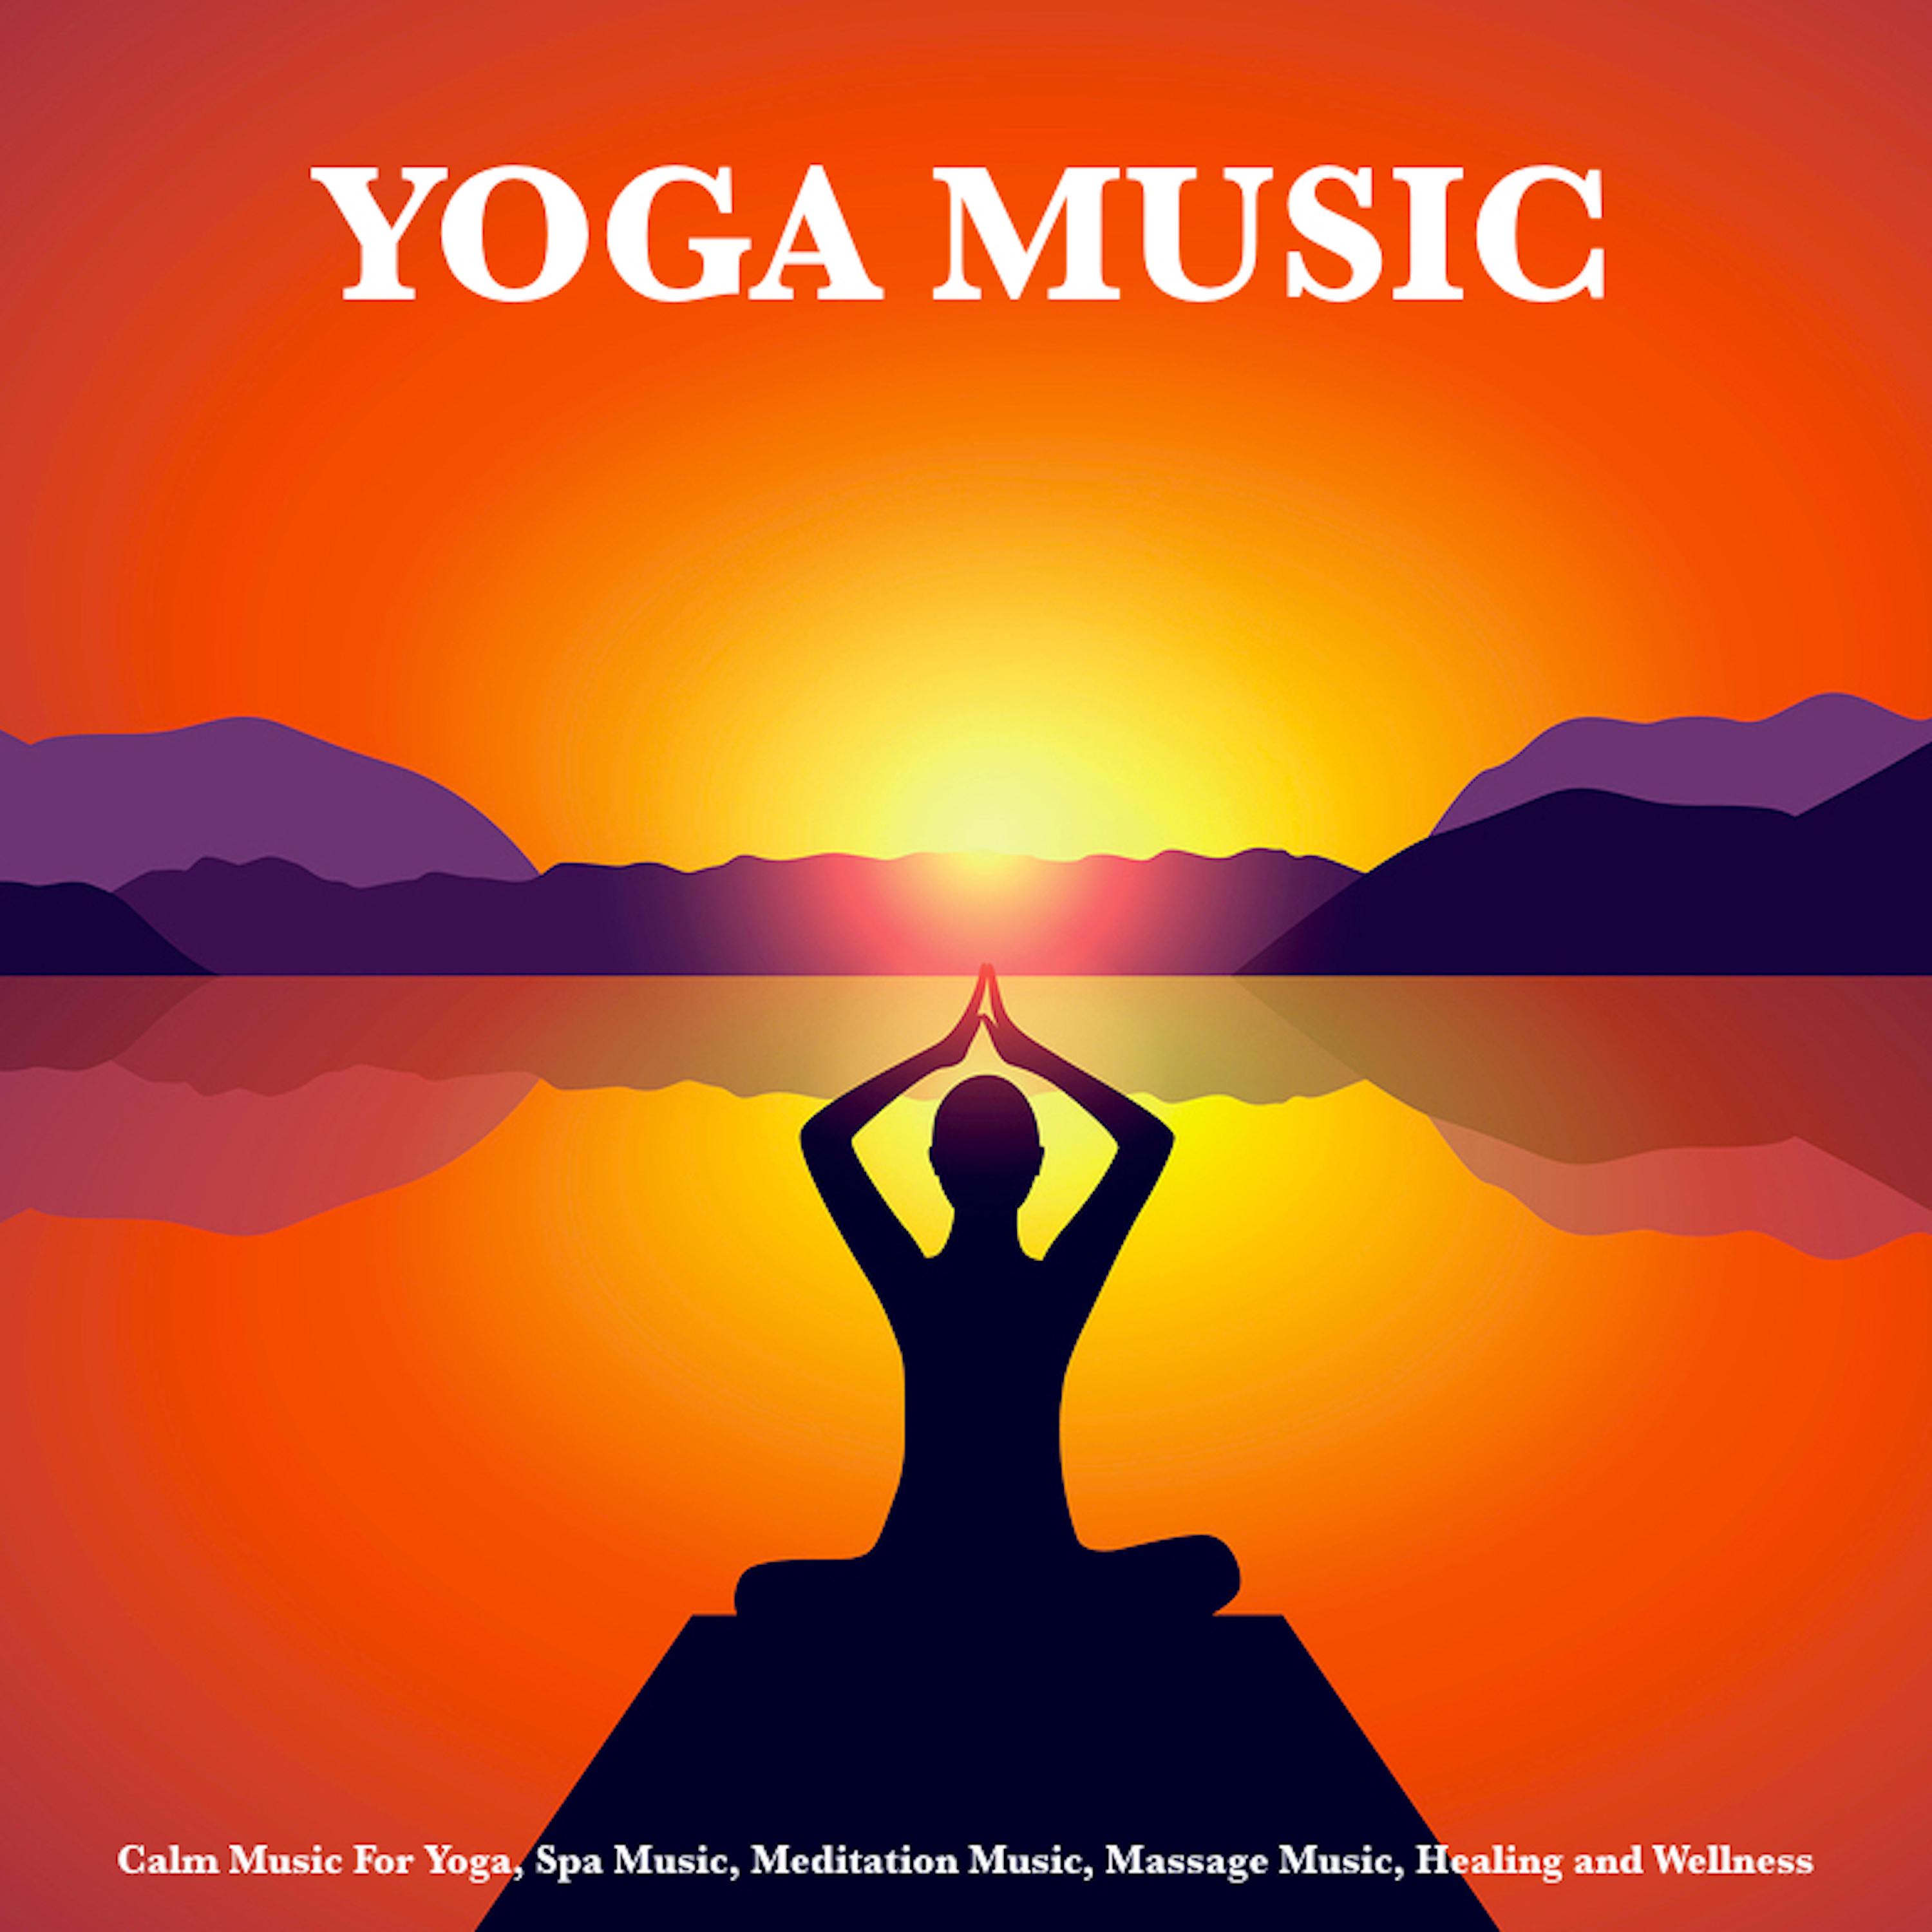 Yoga Music: Calm Music For Yoga, Spa Music, Meditation Music, Massage Music, Healing and Wellness